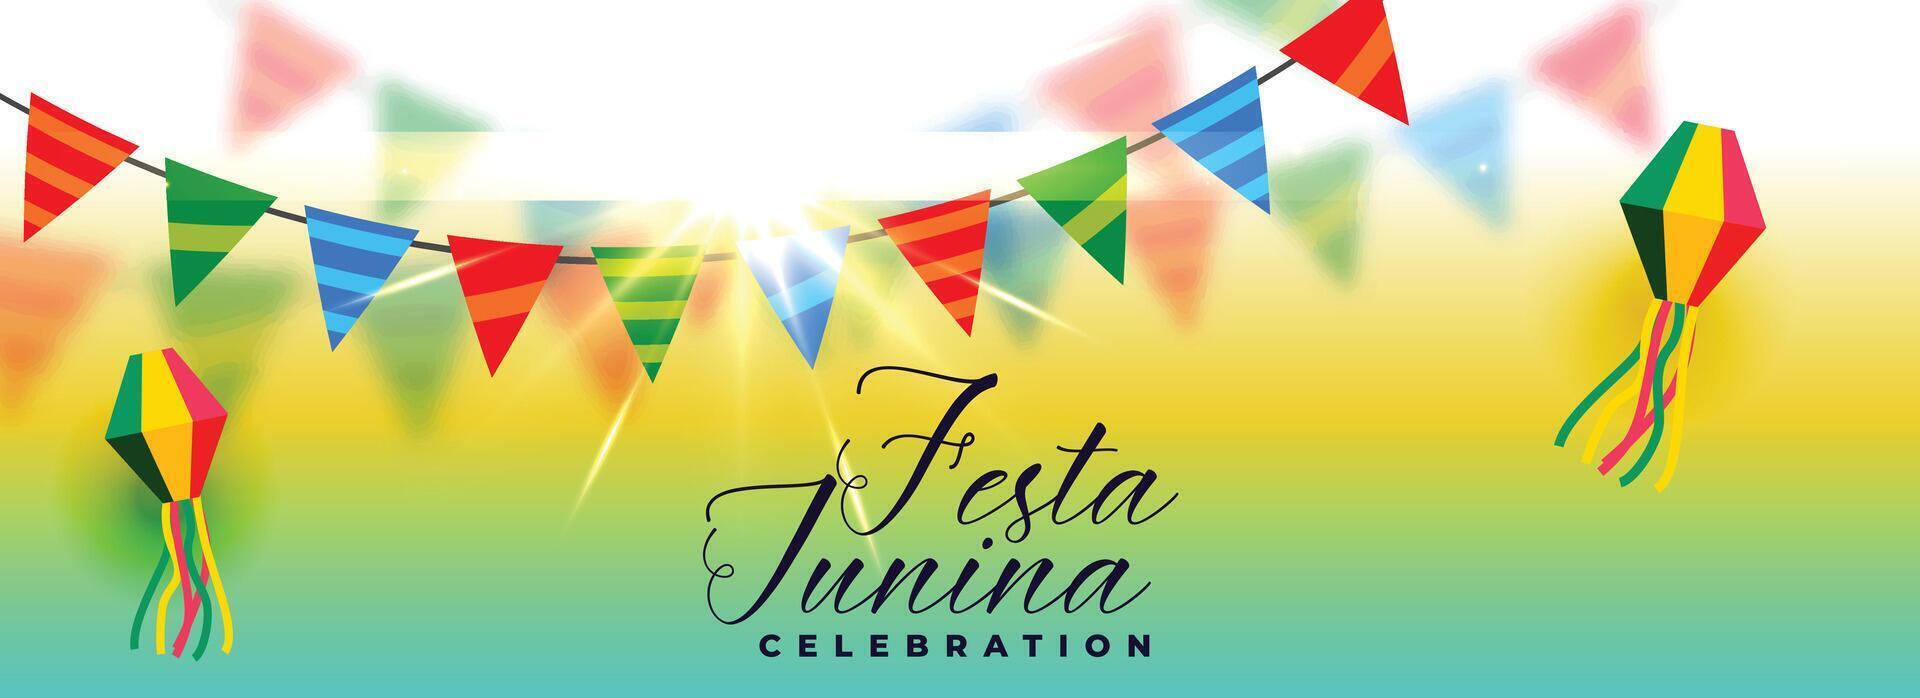 beautiful festa junina celebration banner design vector